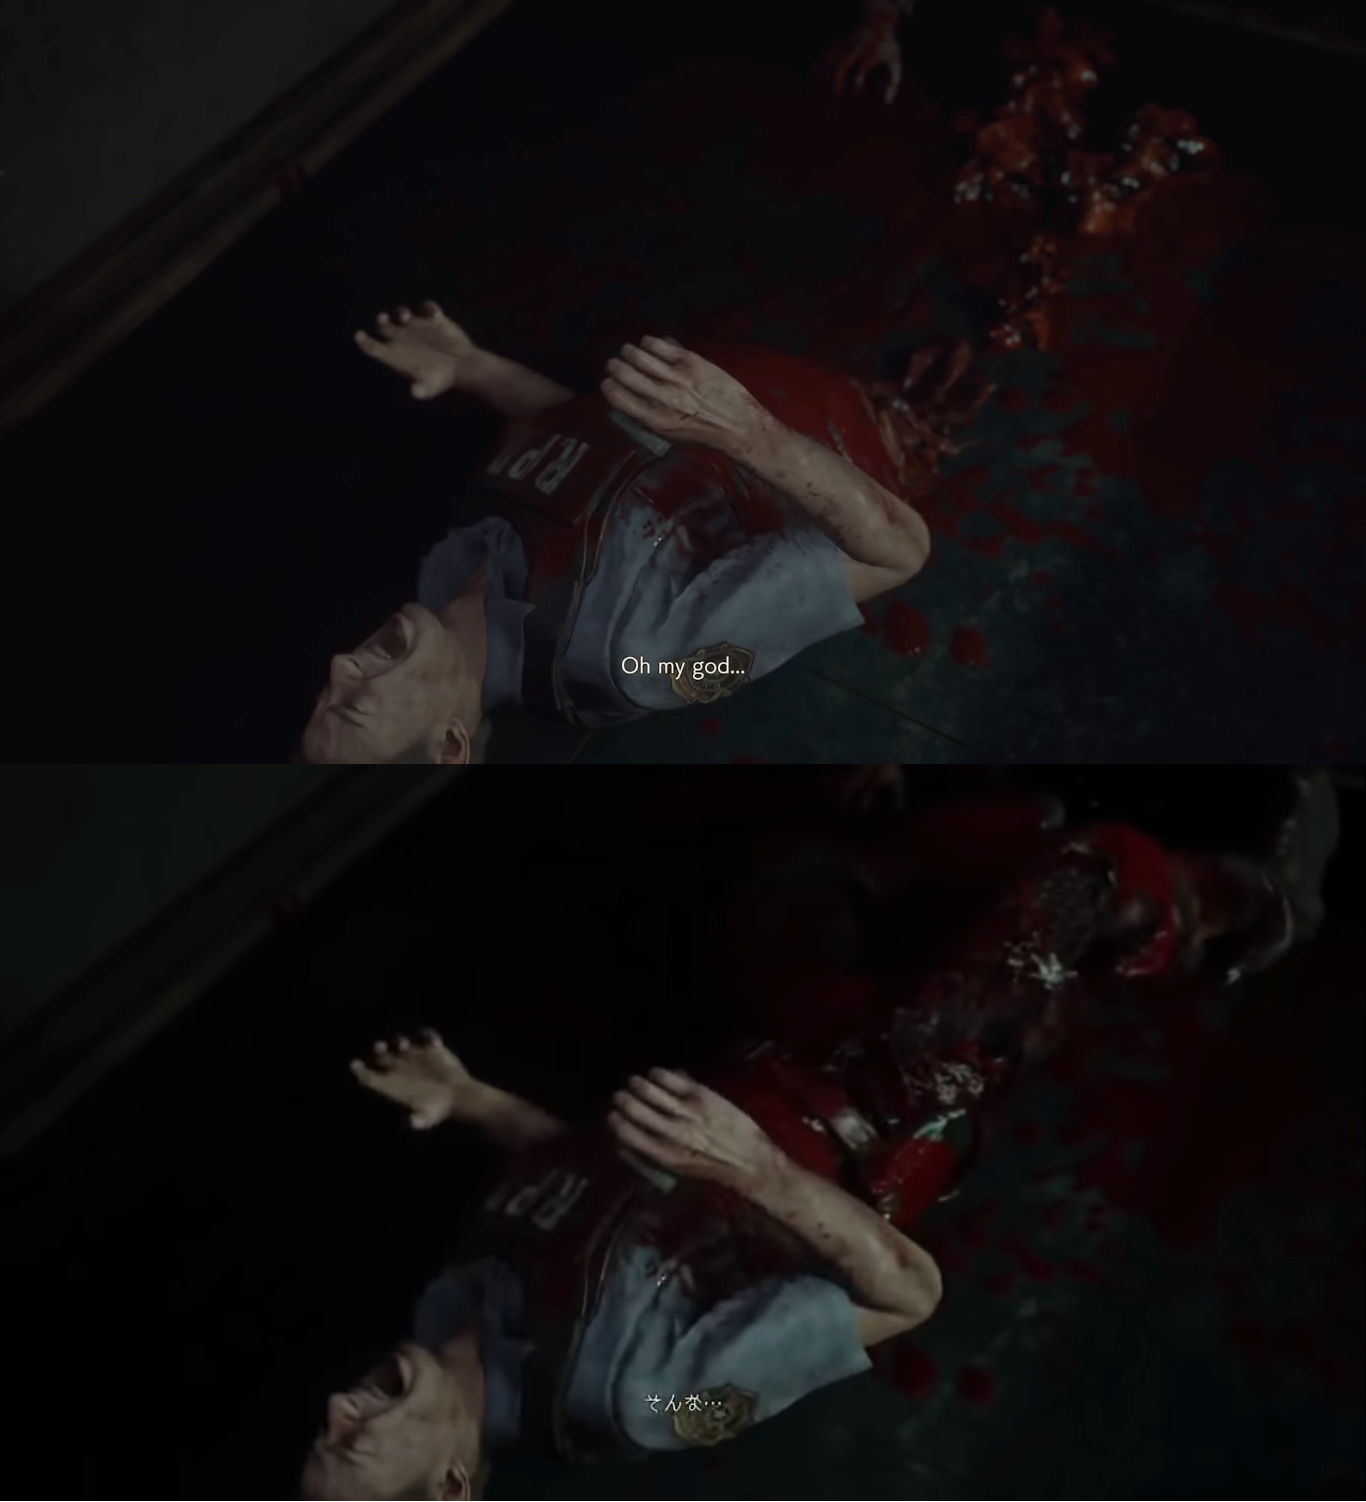 Ashley Death Scene  Resident Evil 4 Remake All Deaths Animation